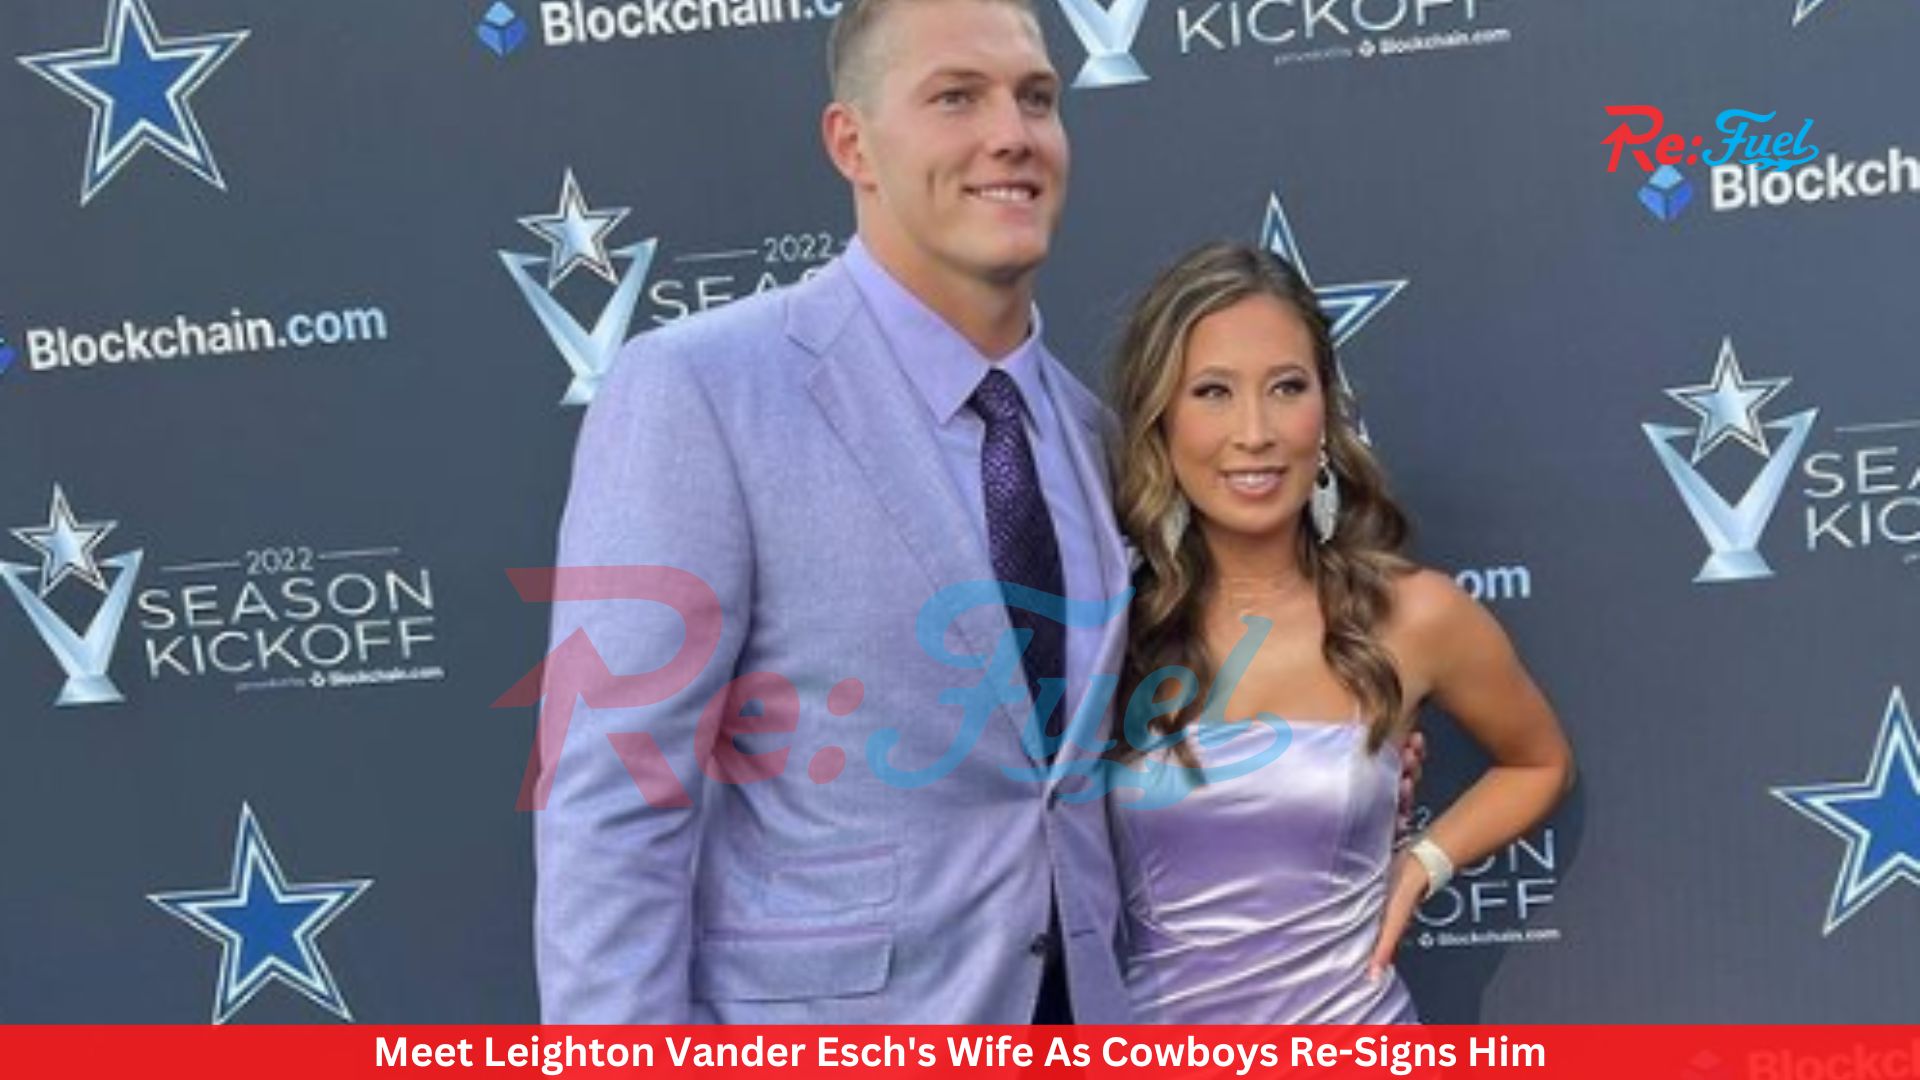 Meet Leighton Vander Esch's Wife As Cowboys Re-Signs Him